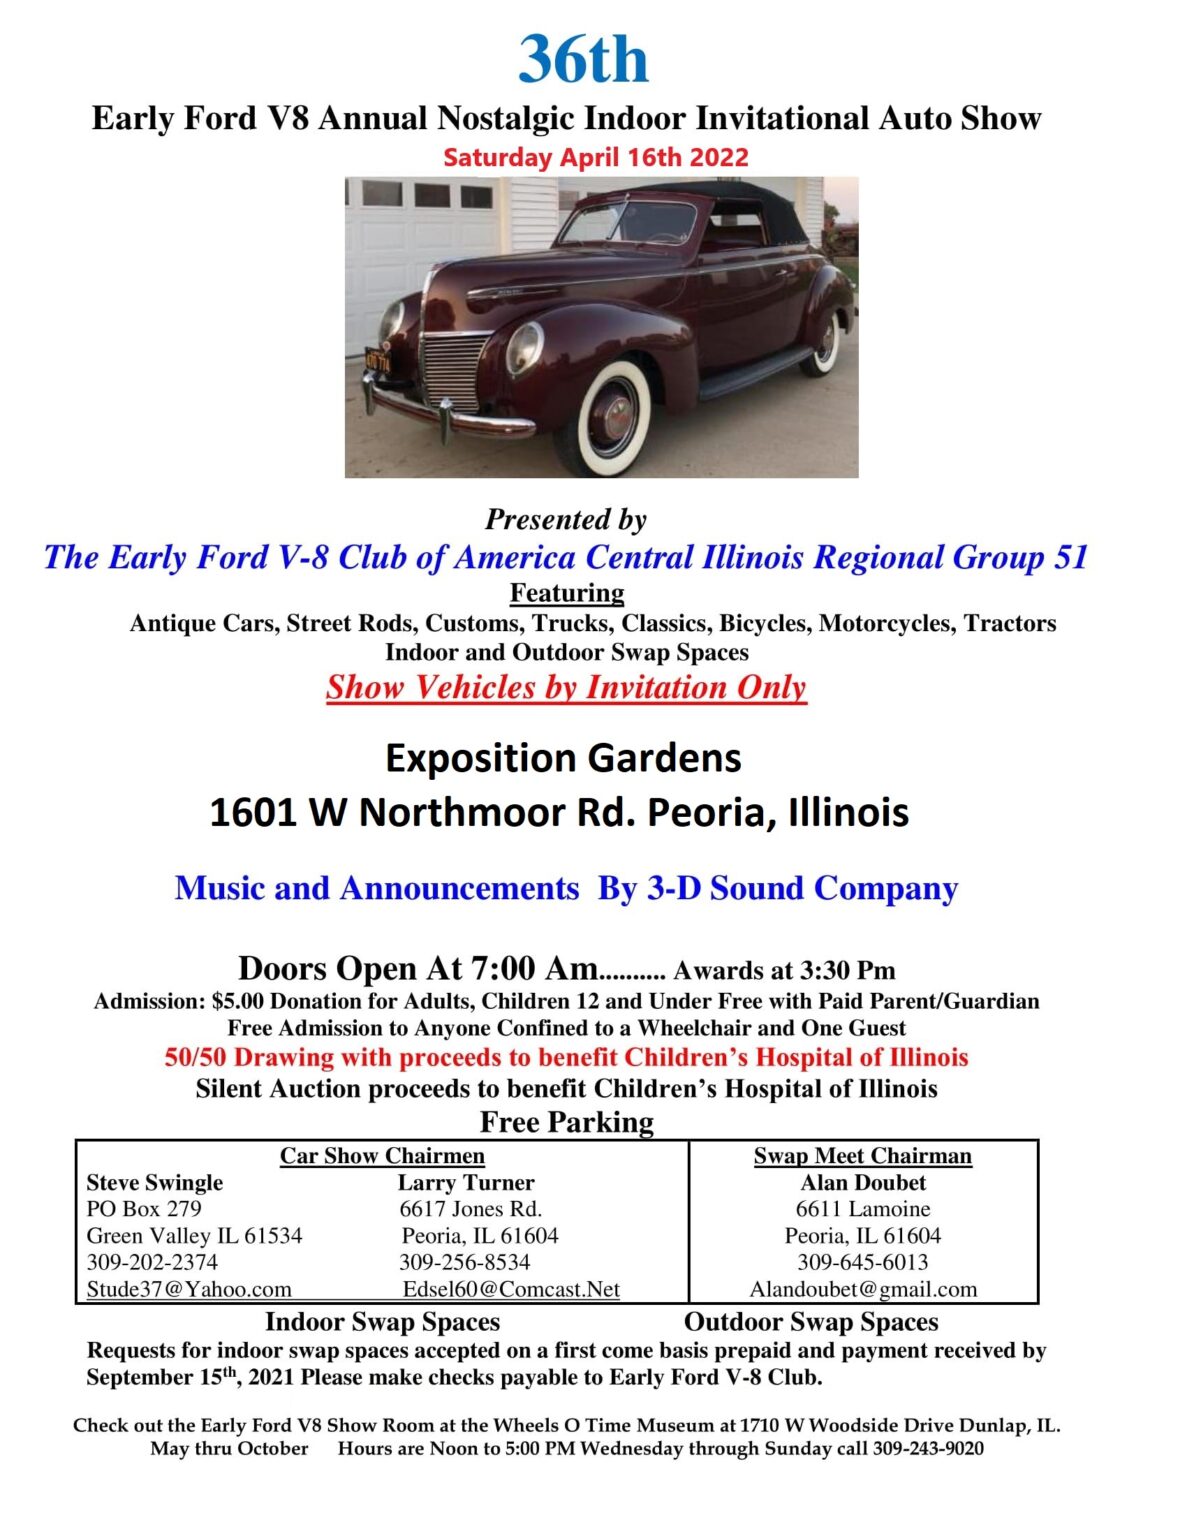 Early Ford V8 Car Show and Swap Meet Car Show Radar